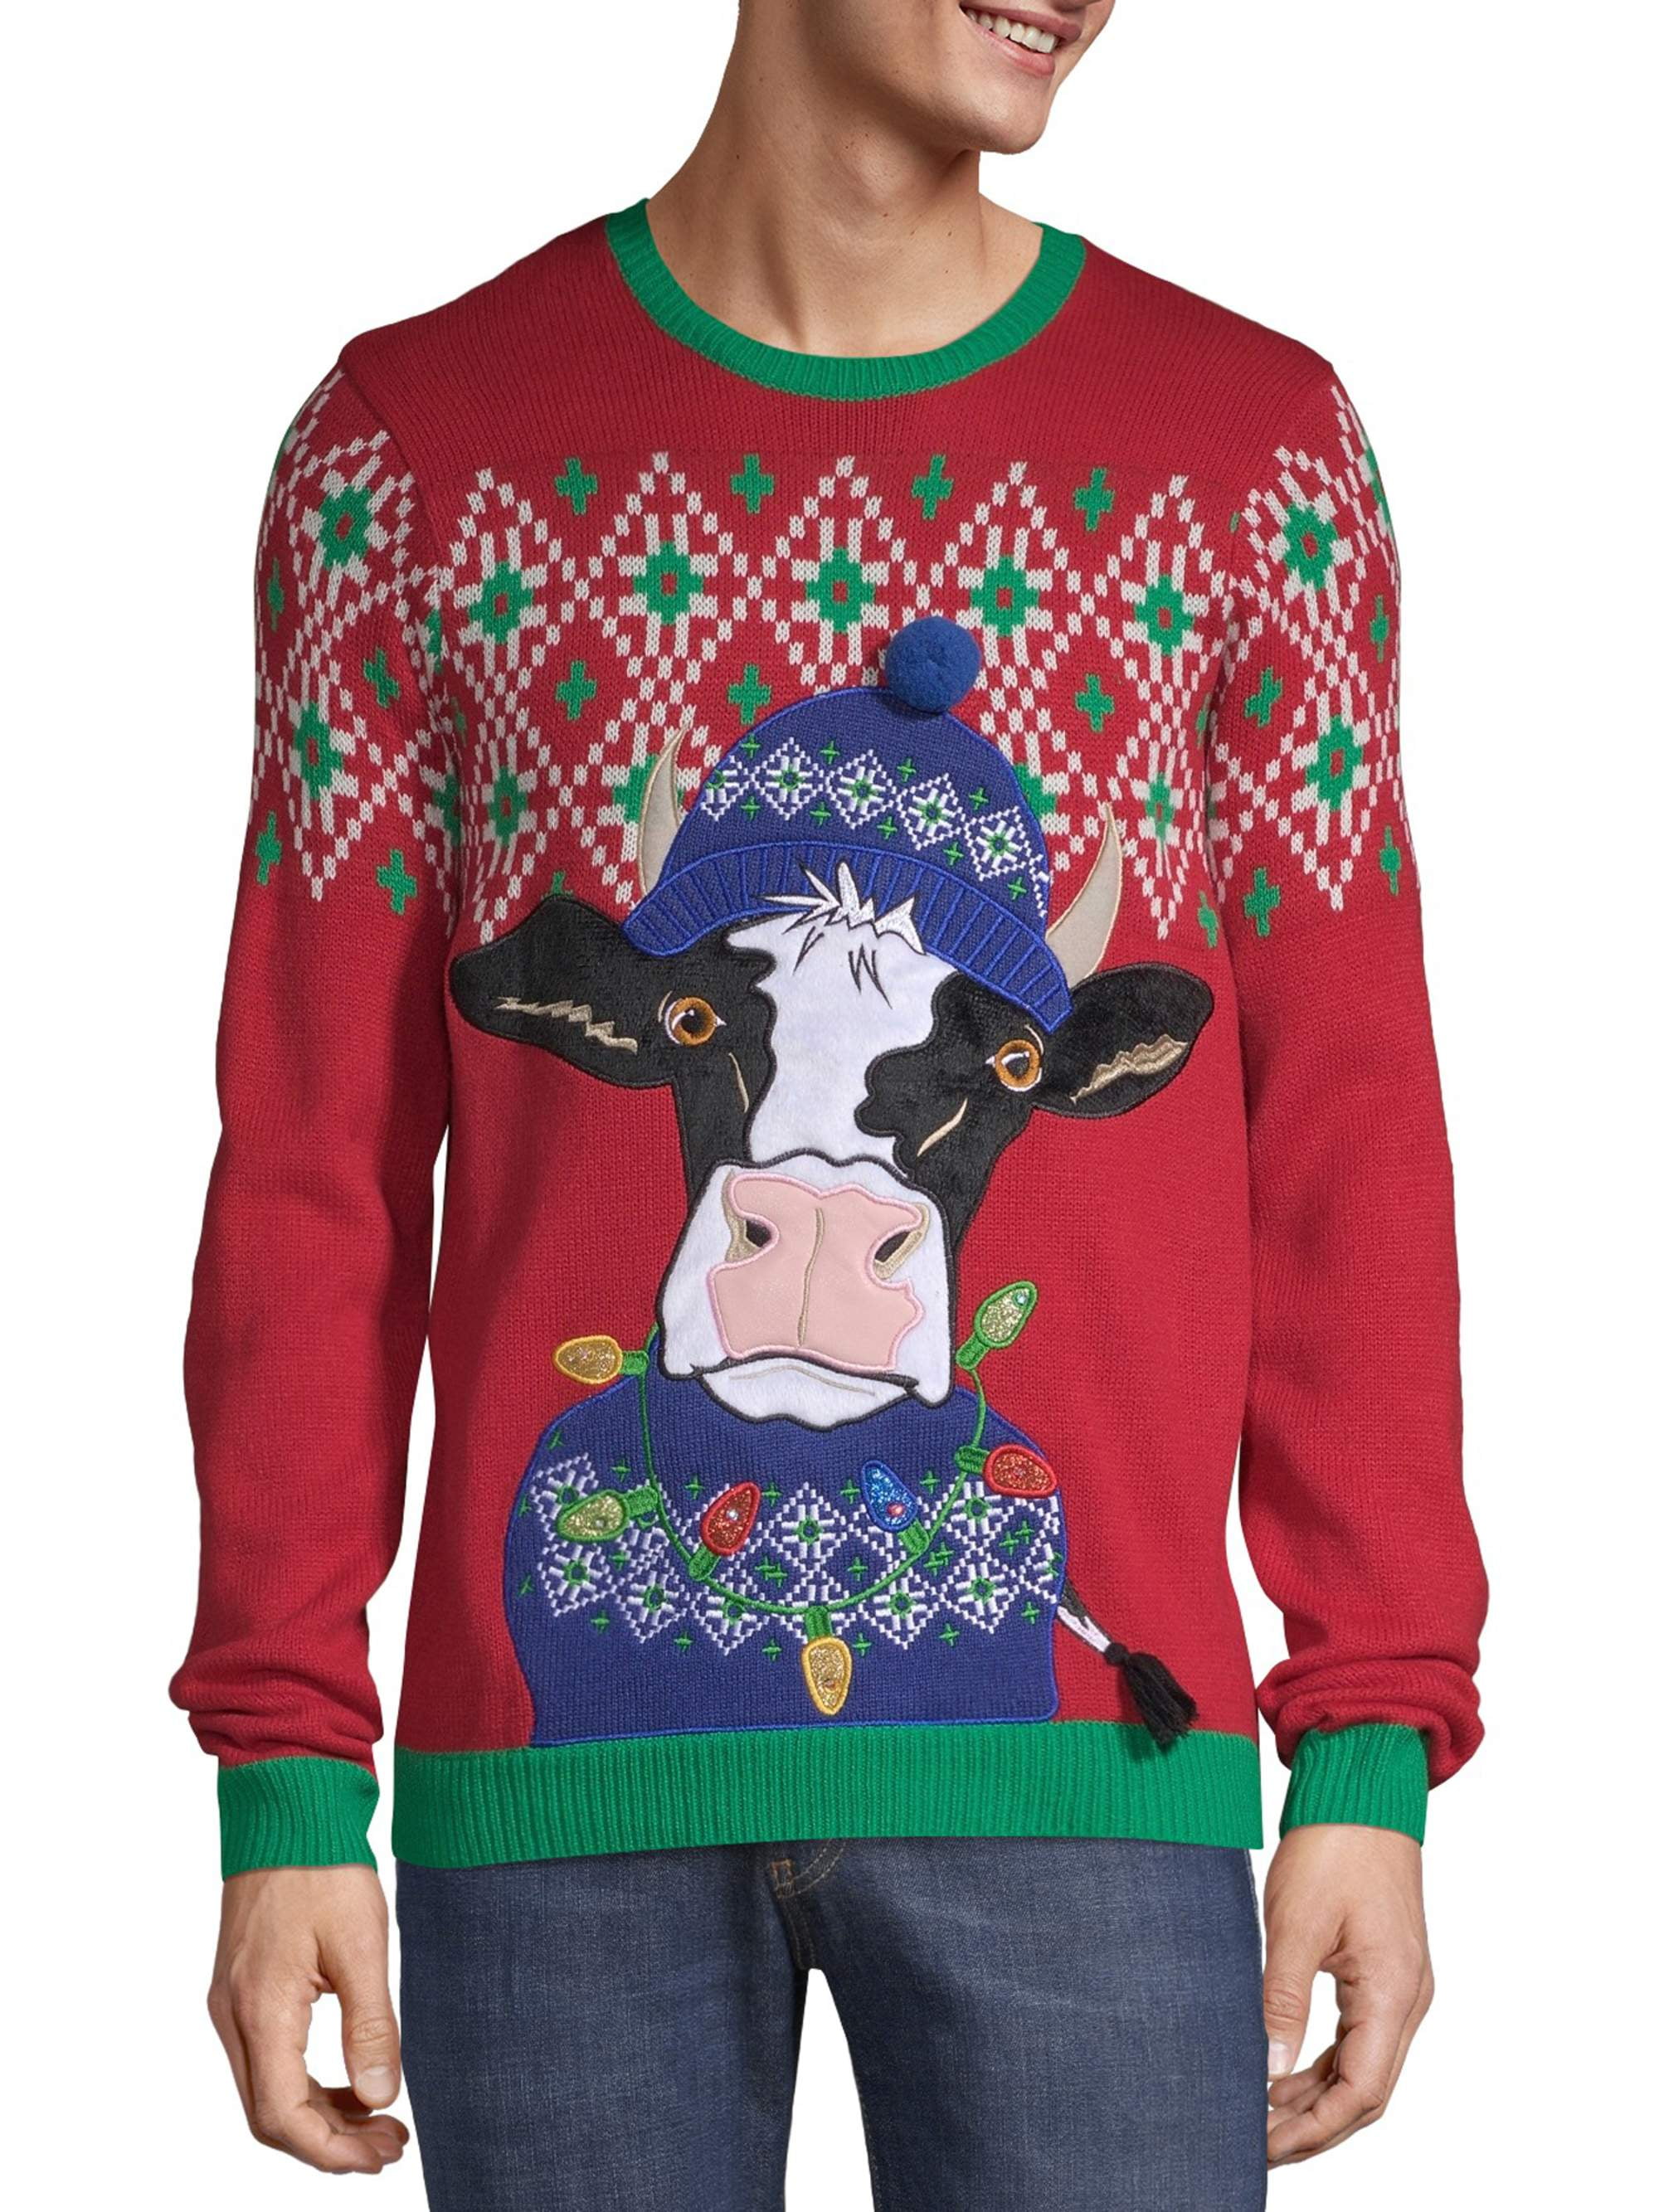 Holiday Time Holiday Time Men S Light Up Cow Ugly Christmas Sweater Walmart Com Walmart Com